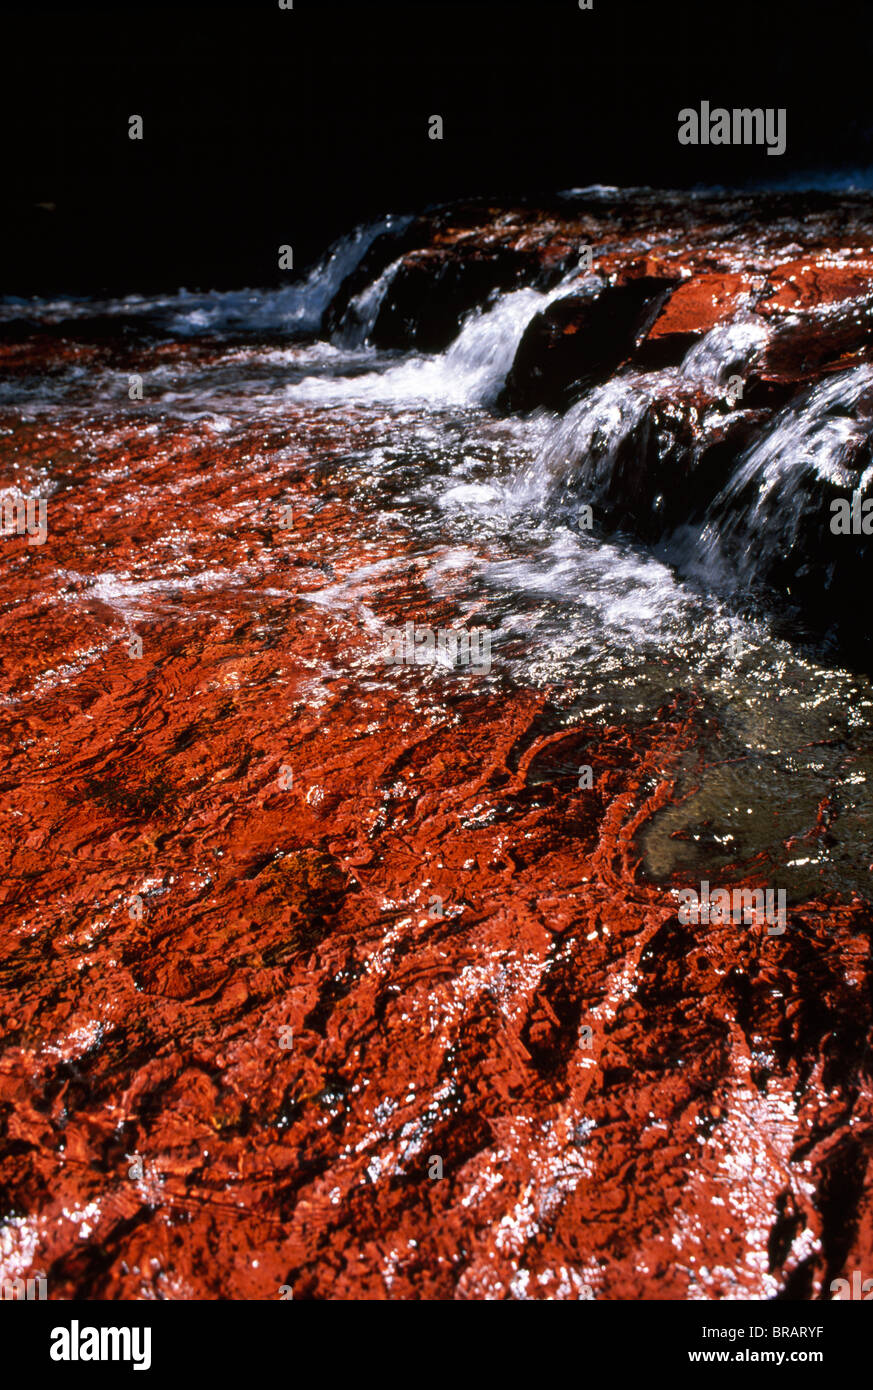 Quebrada de jaspe, Jasper cascade rocheuse, Gran Sabana, Venezuela, Amérique du Sud Banque D'Images